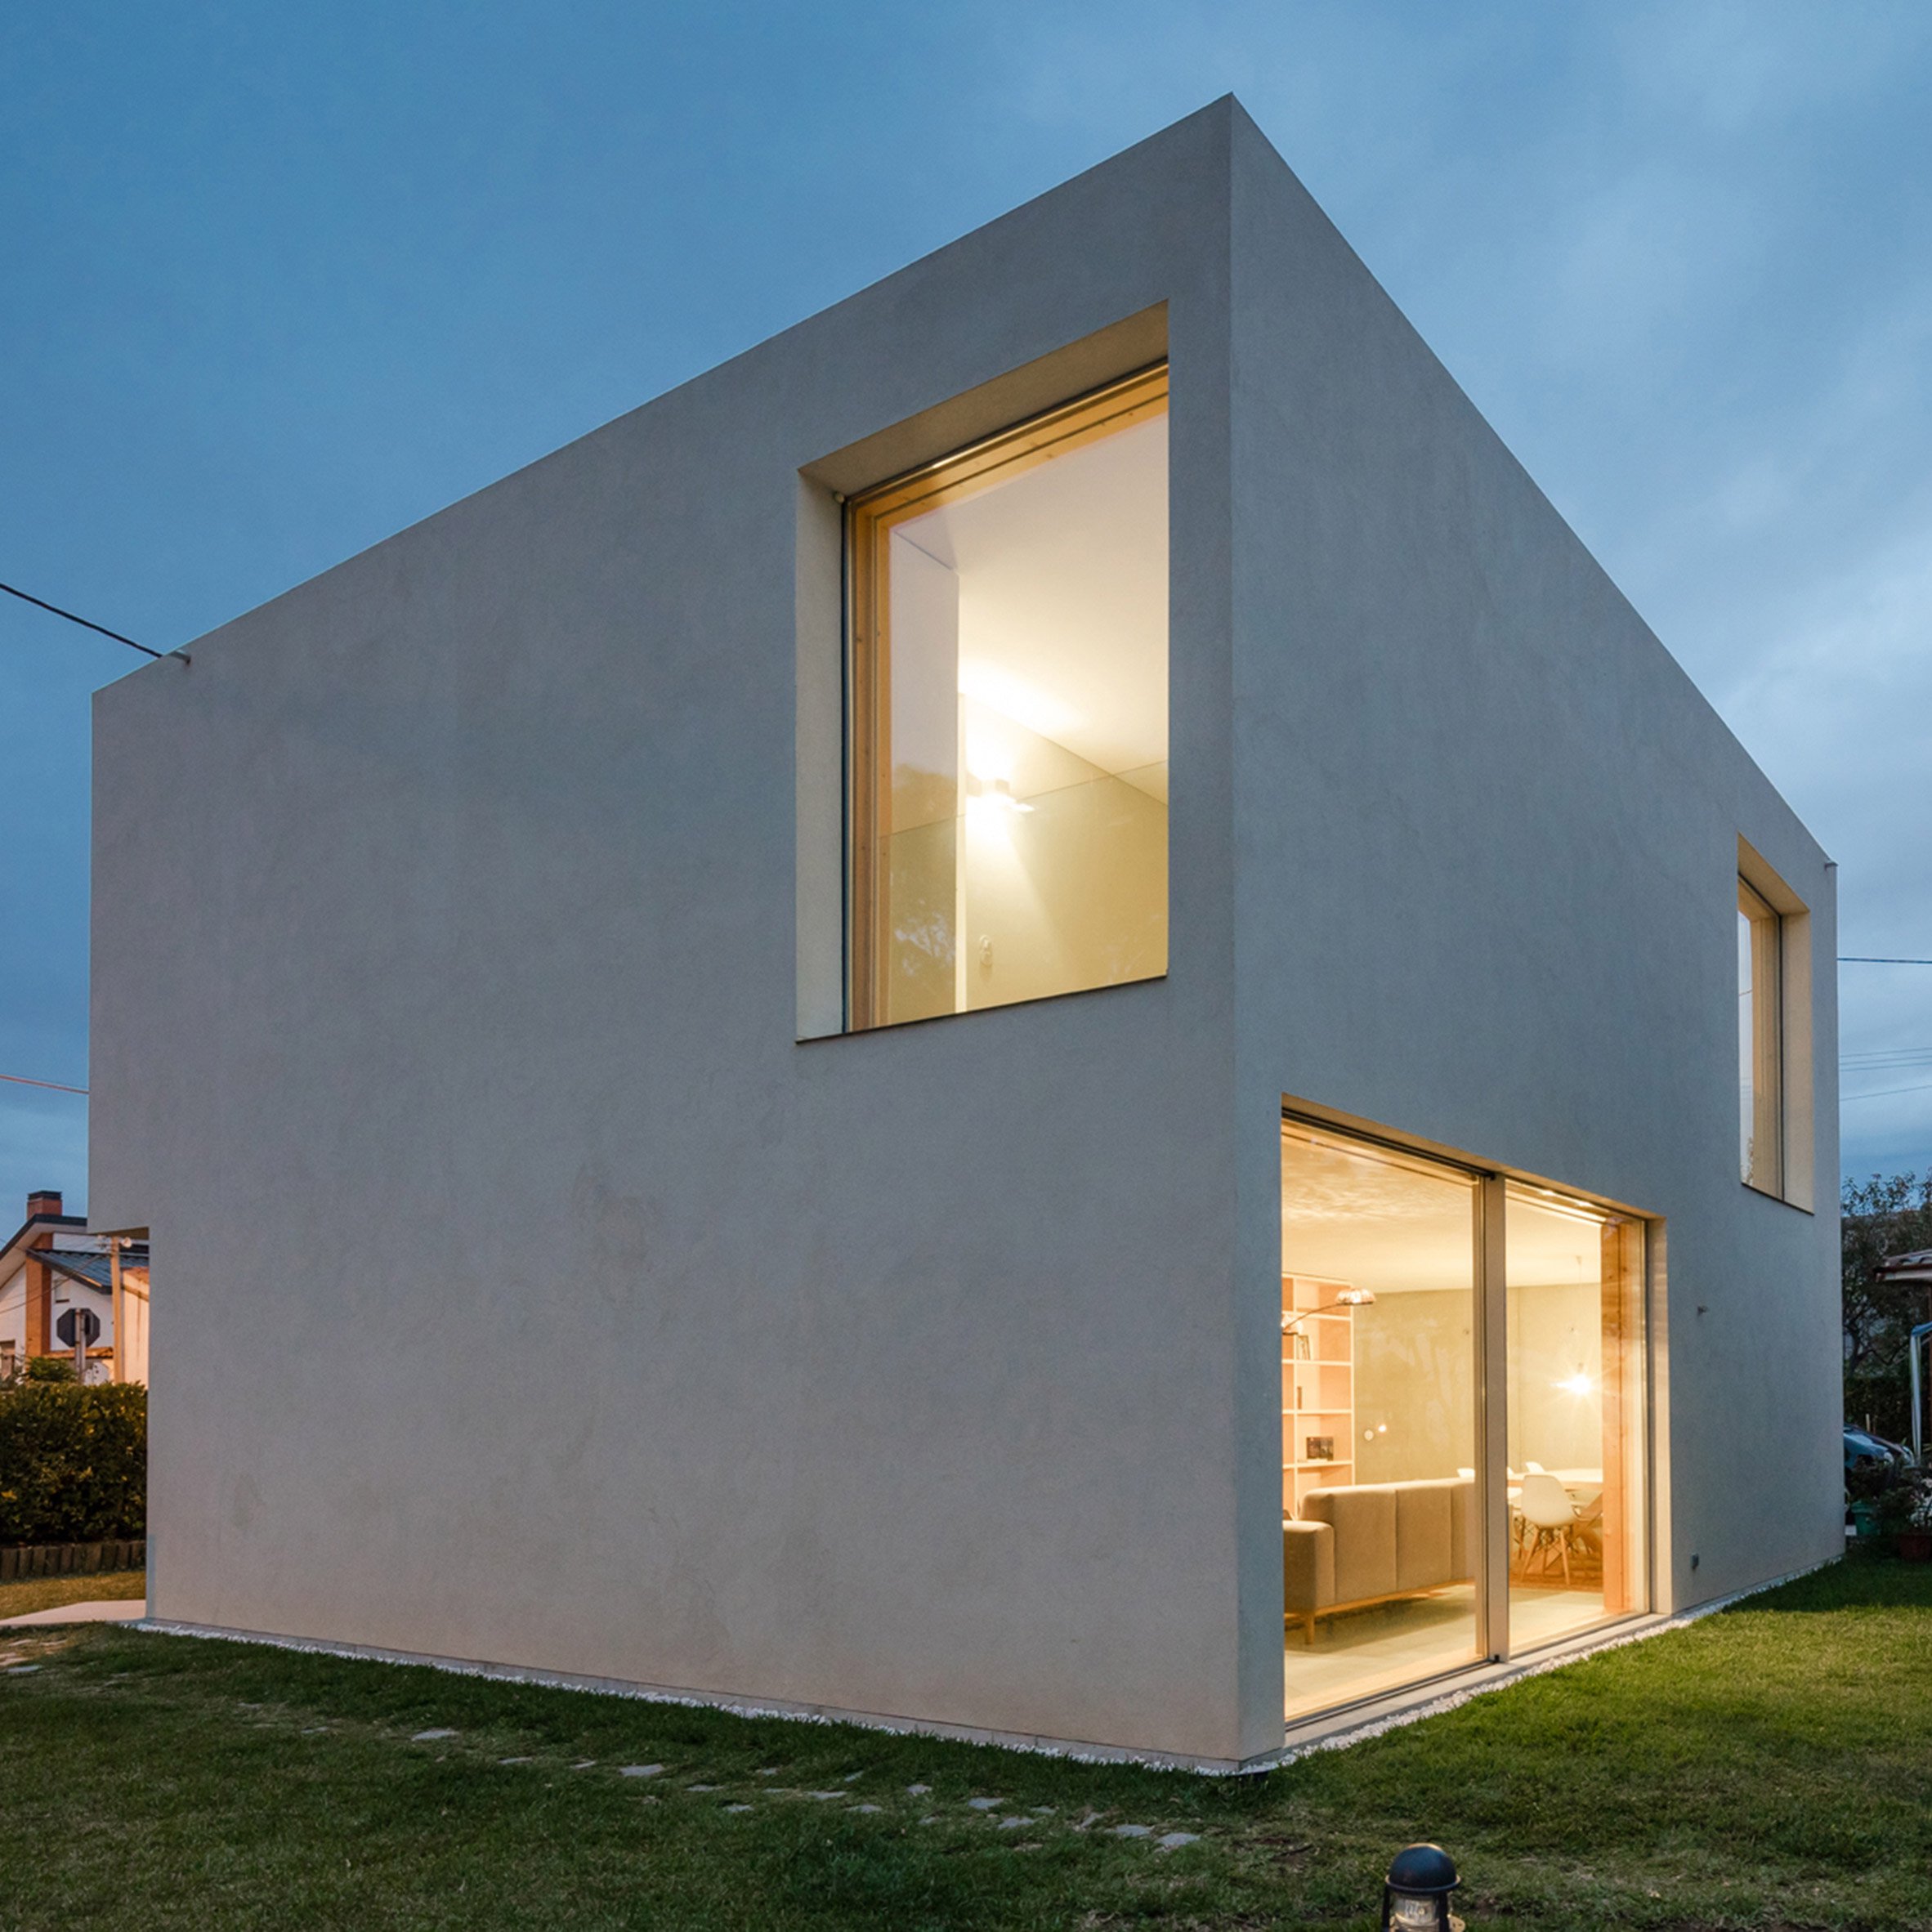 mami-house-noarquitectos-lda-architecture-residential-houses-portugal-_dezeen_sq-b-852x852.jpg